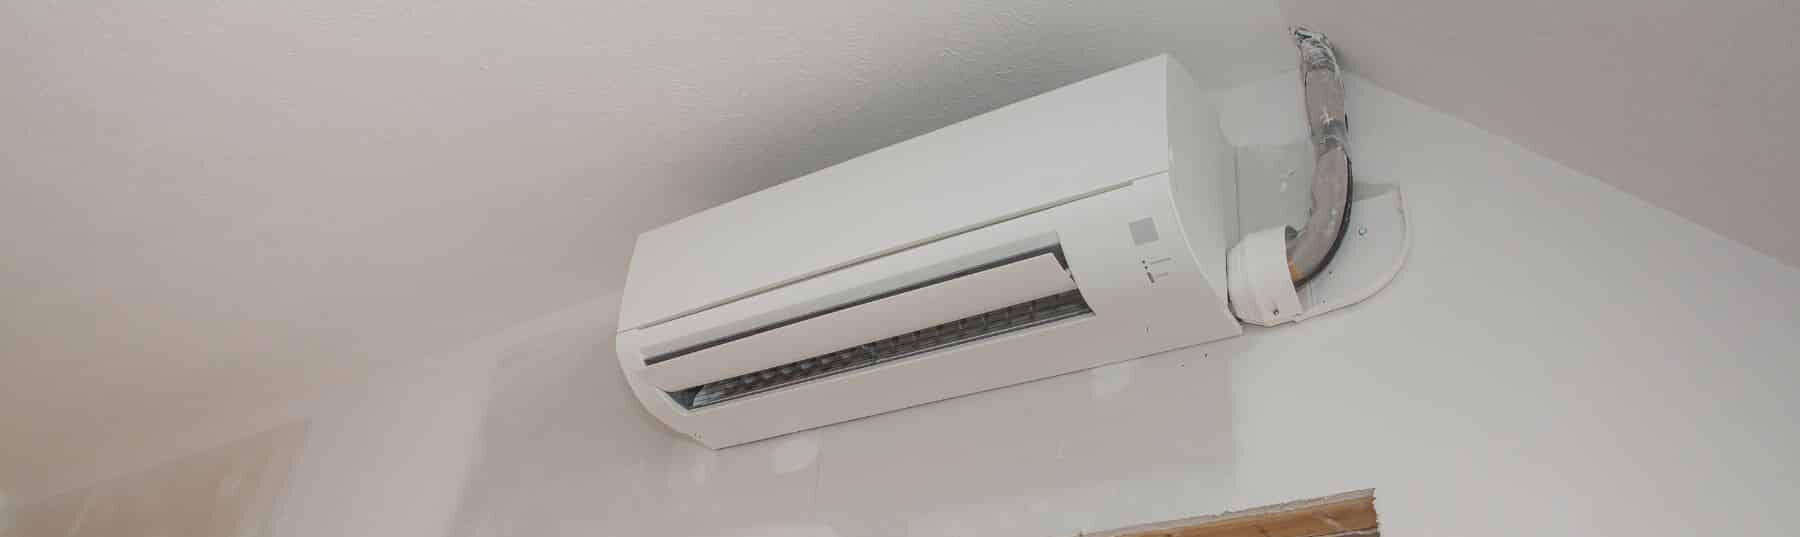 Wall-mounted AC